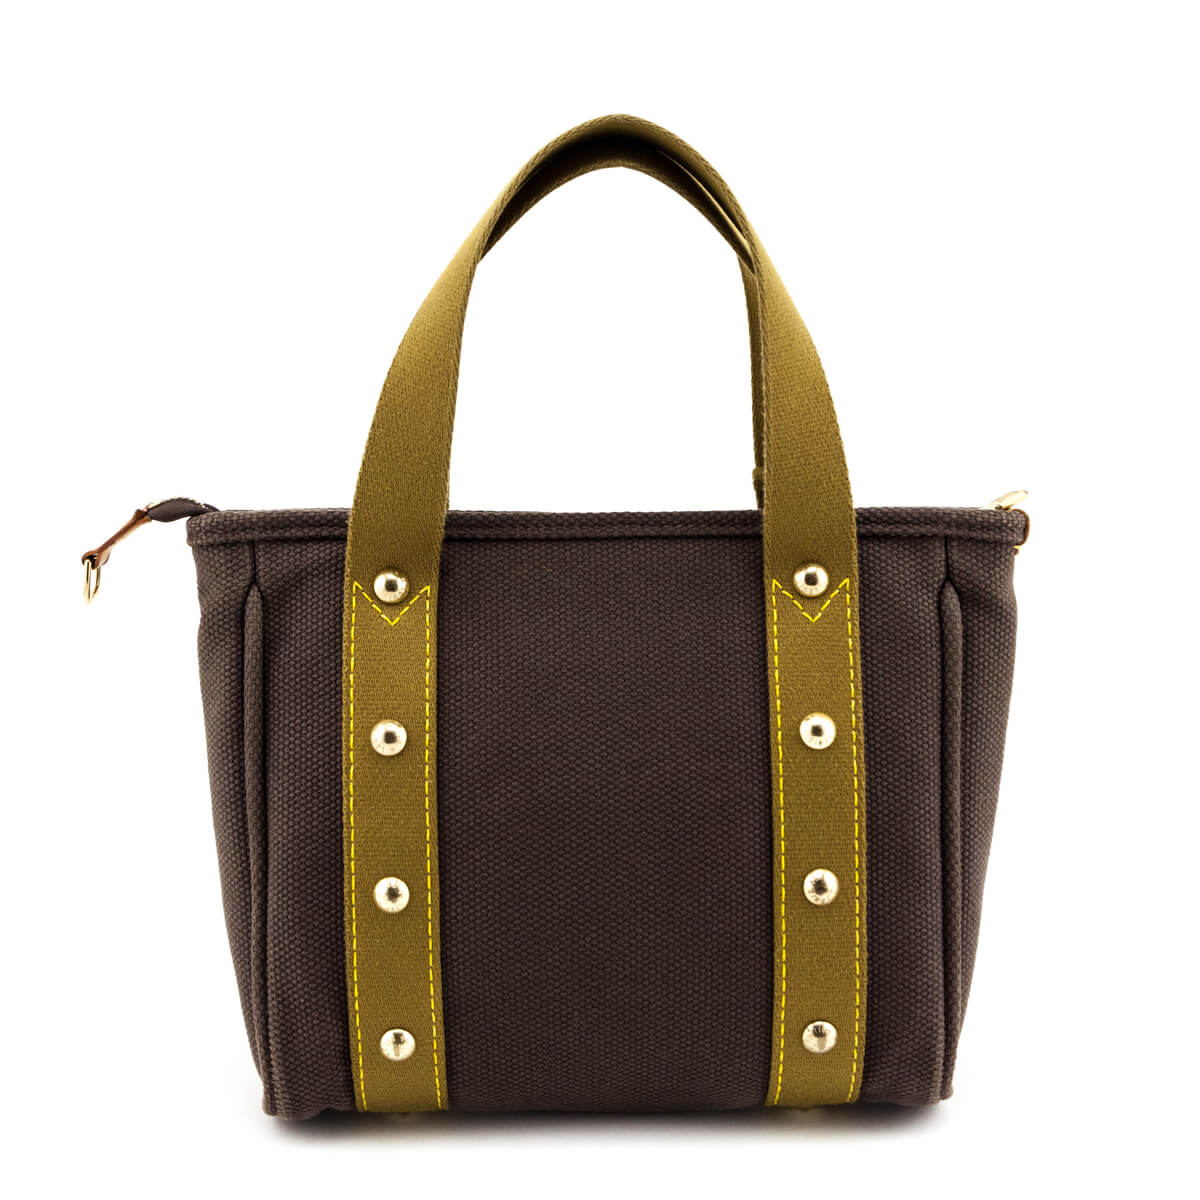 Sold at Auction: Louis Vuitton Toile Antigua Cabas PM handbag